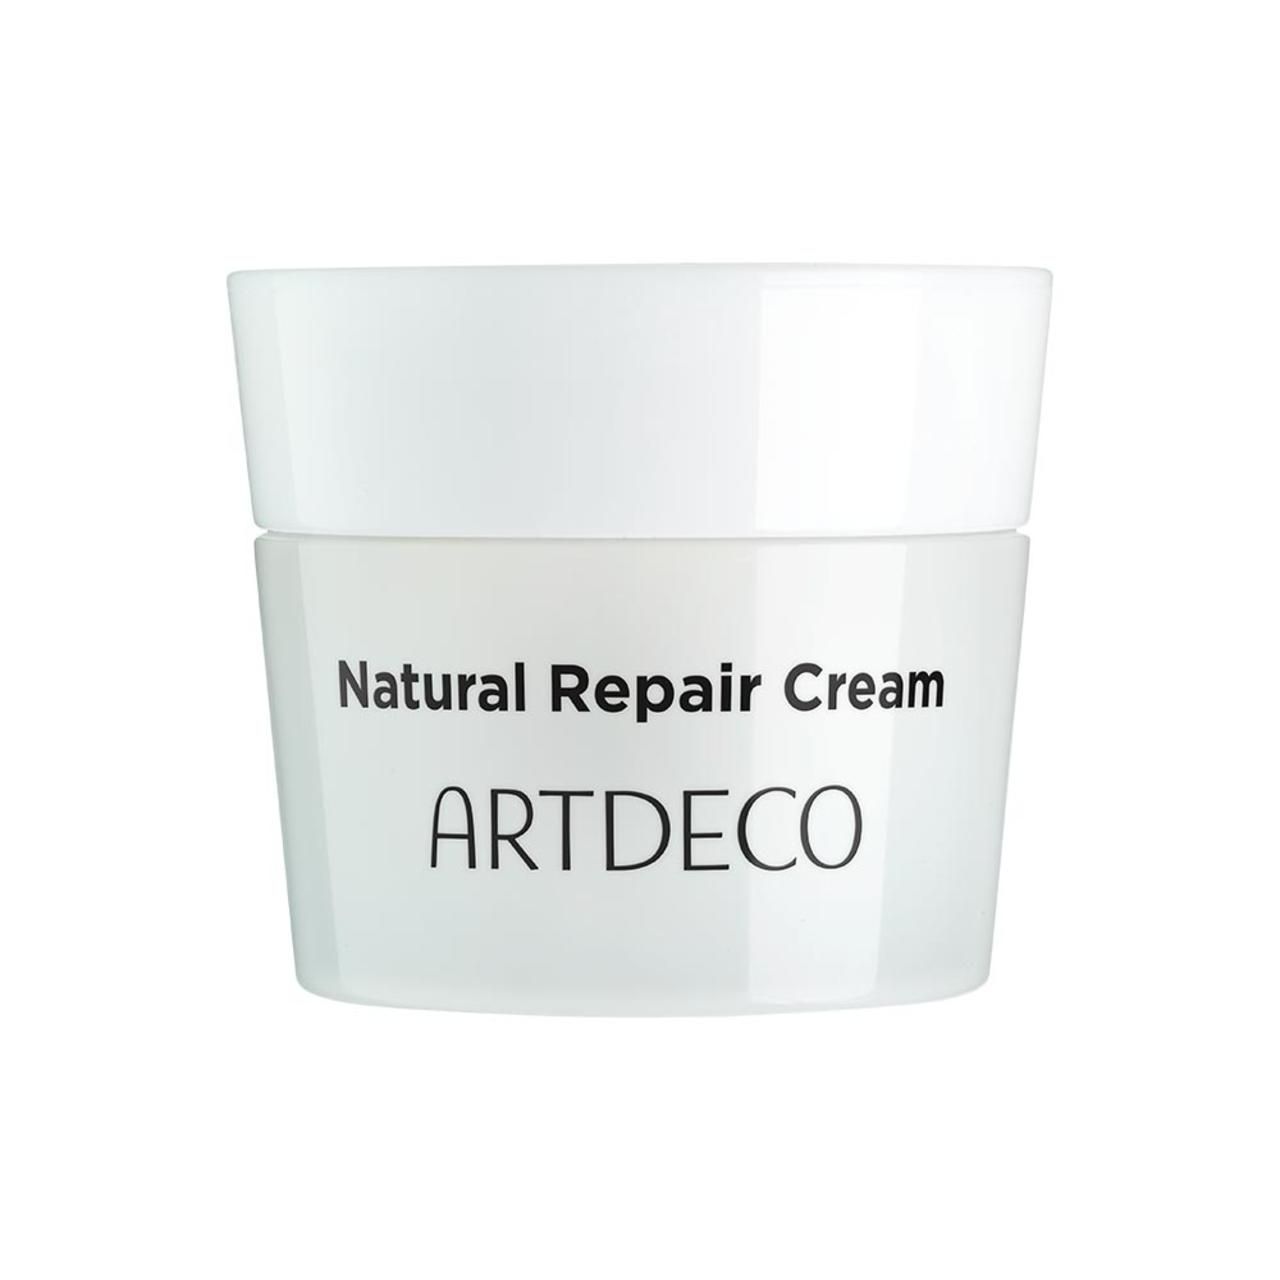 Artdeco, Natural Repair Cream